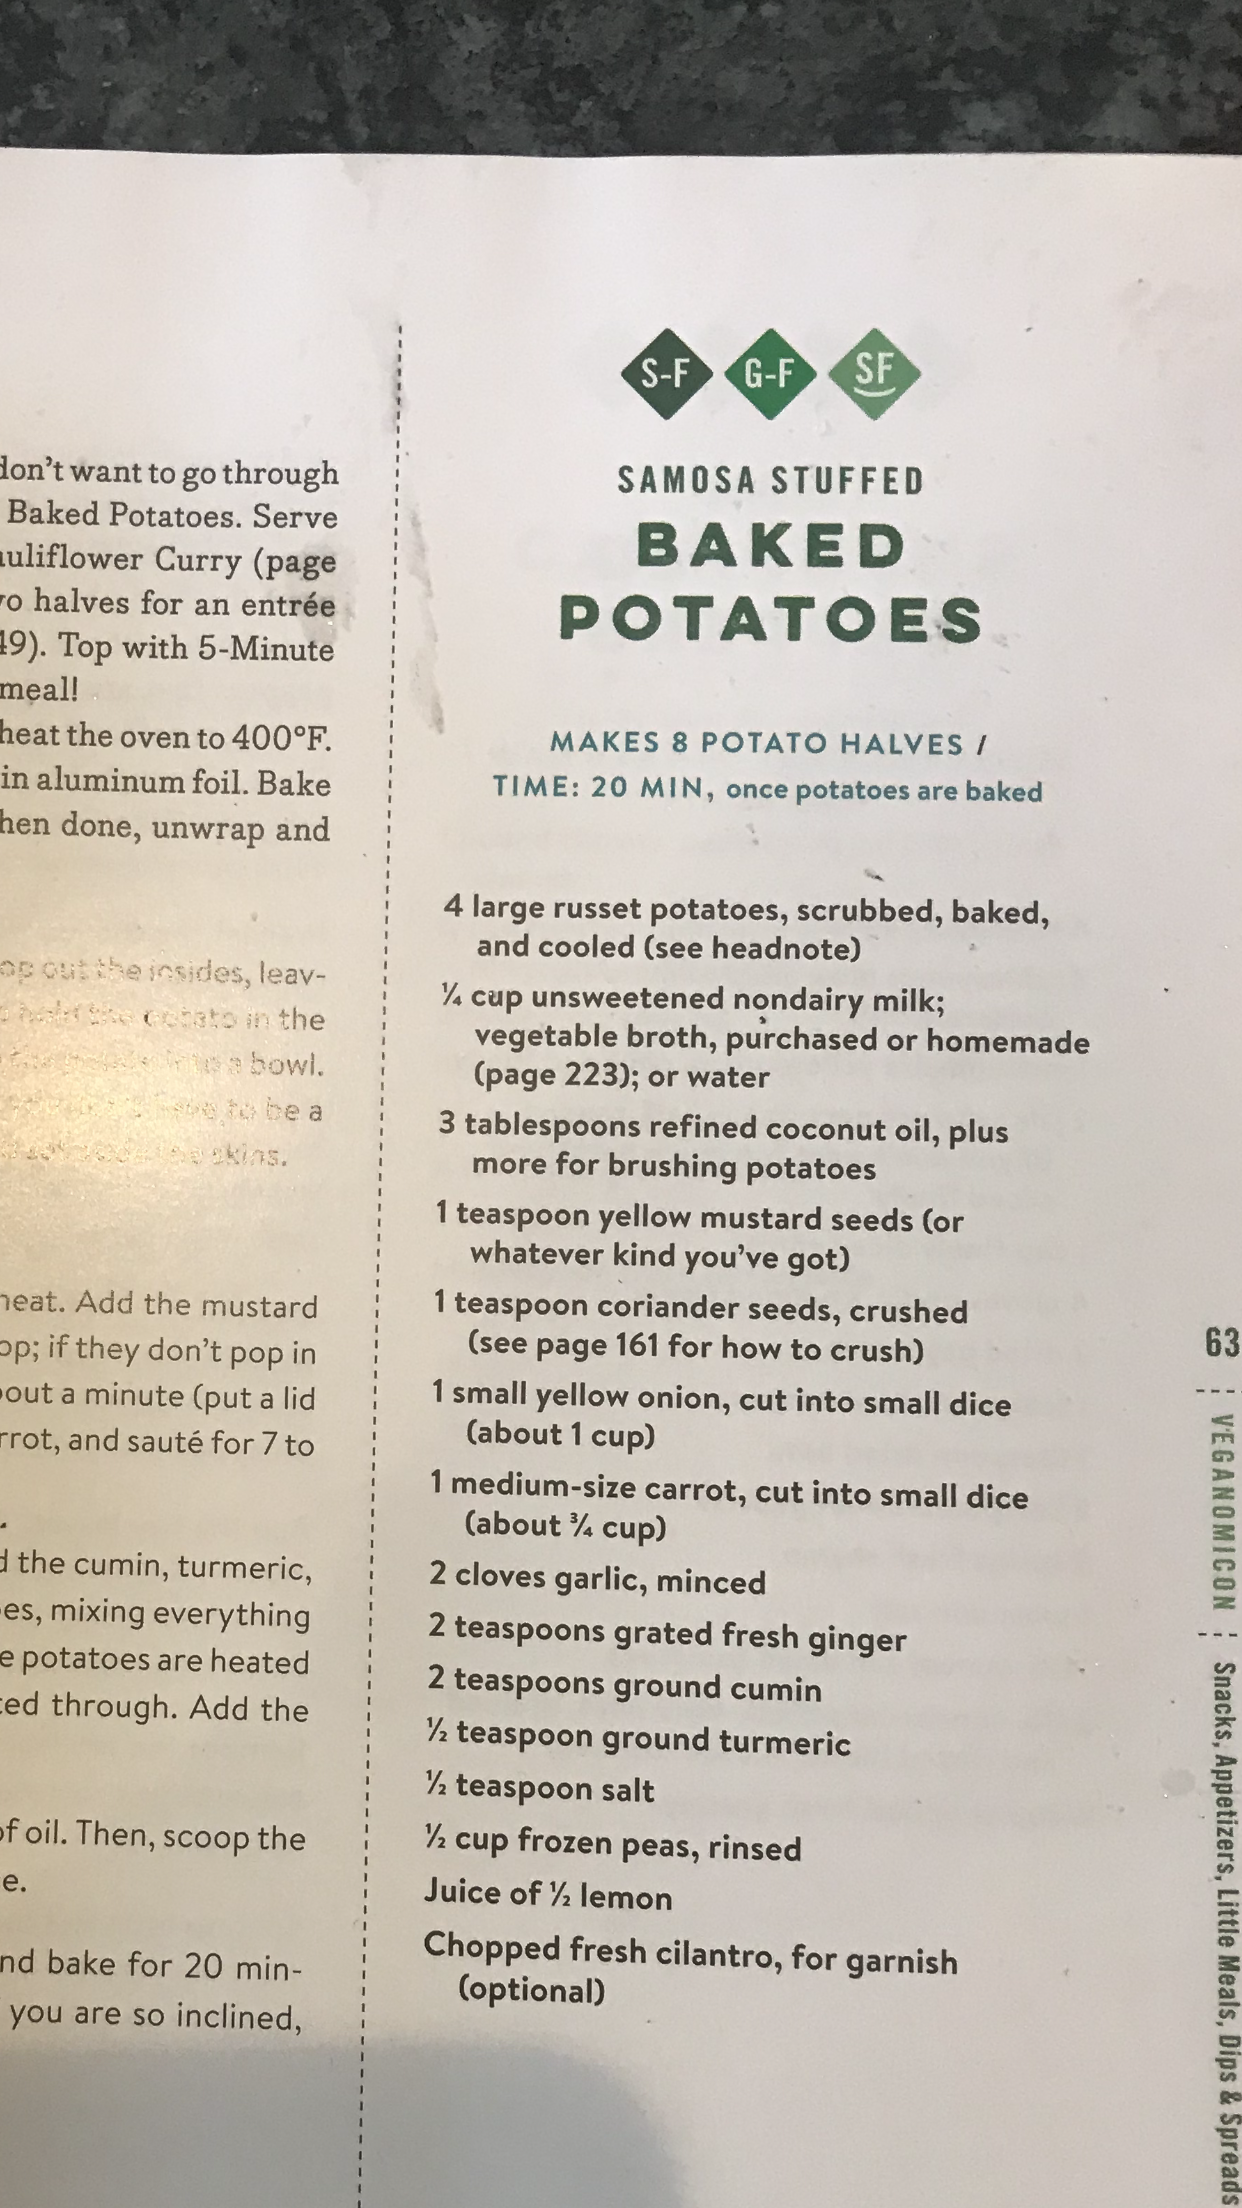 Picture of the recipe book